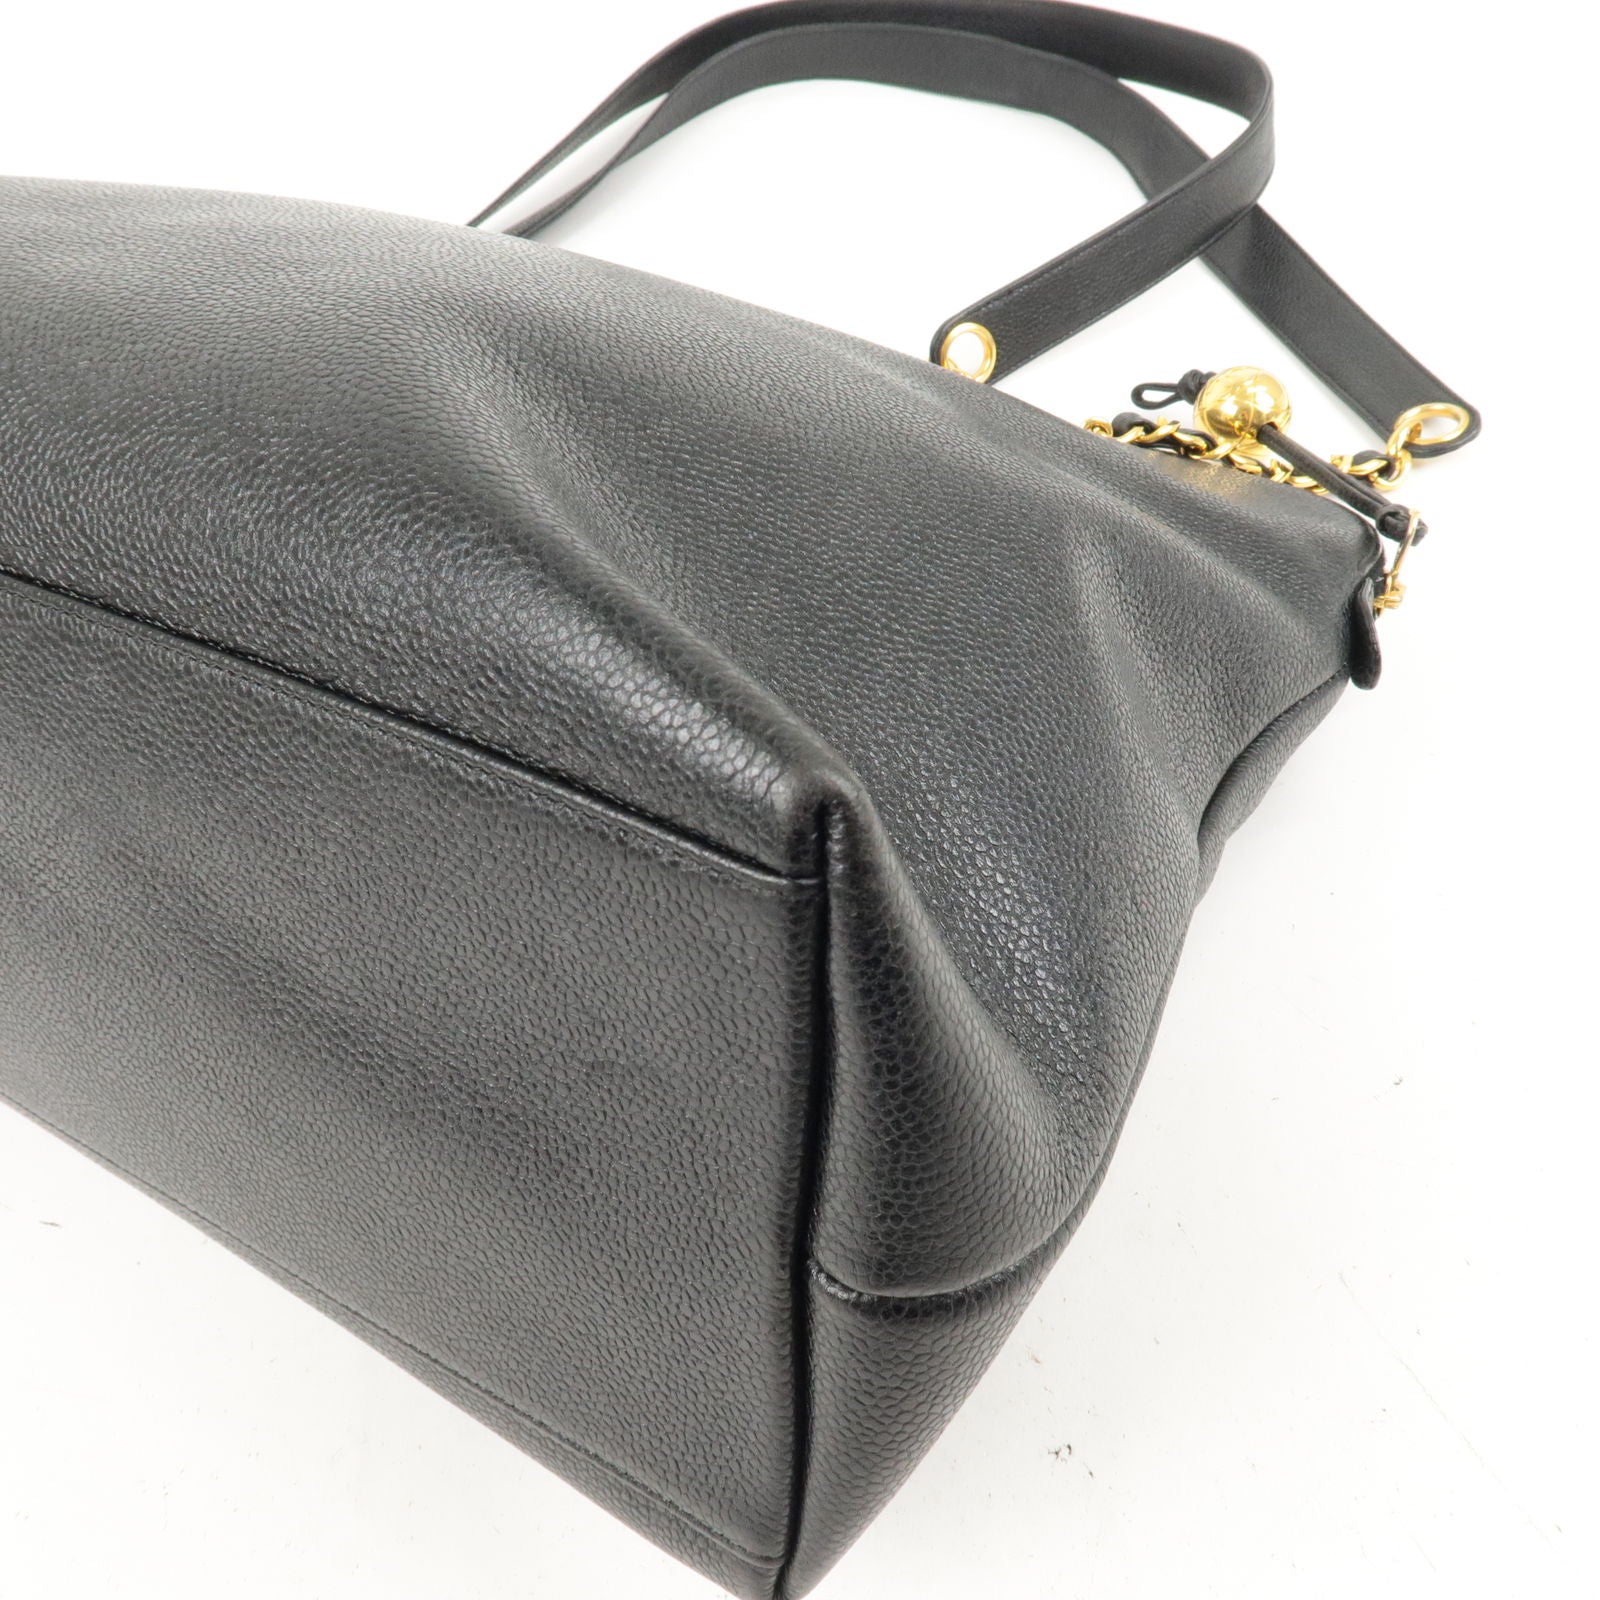 Hardware - Tote - Black - Bag - ep_vintage luxury Store - A03578